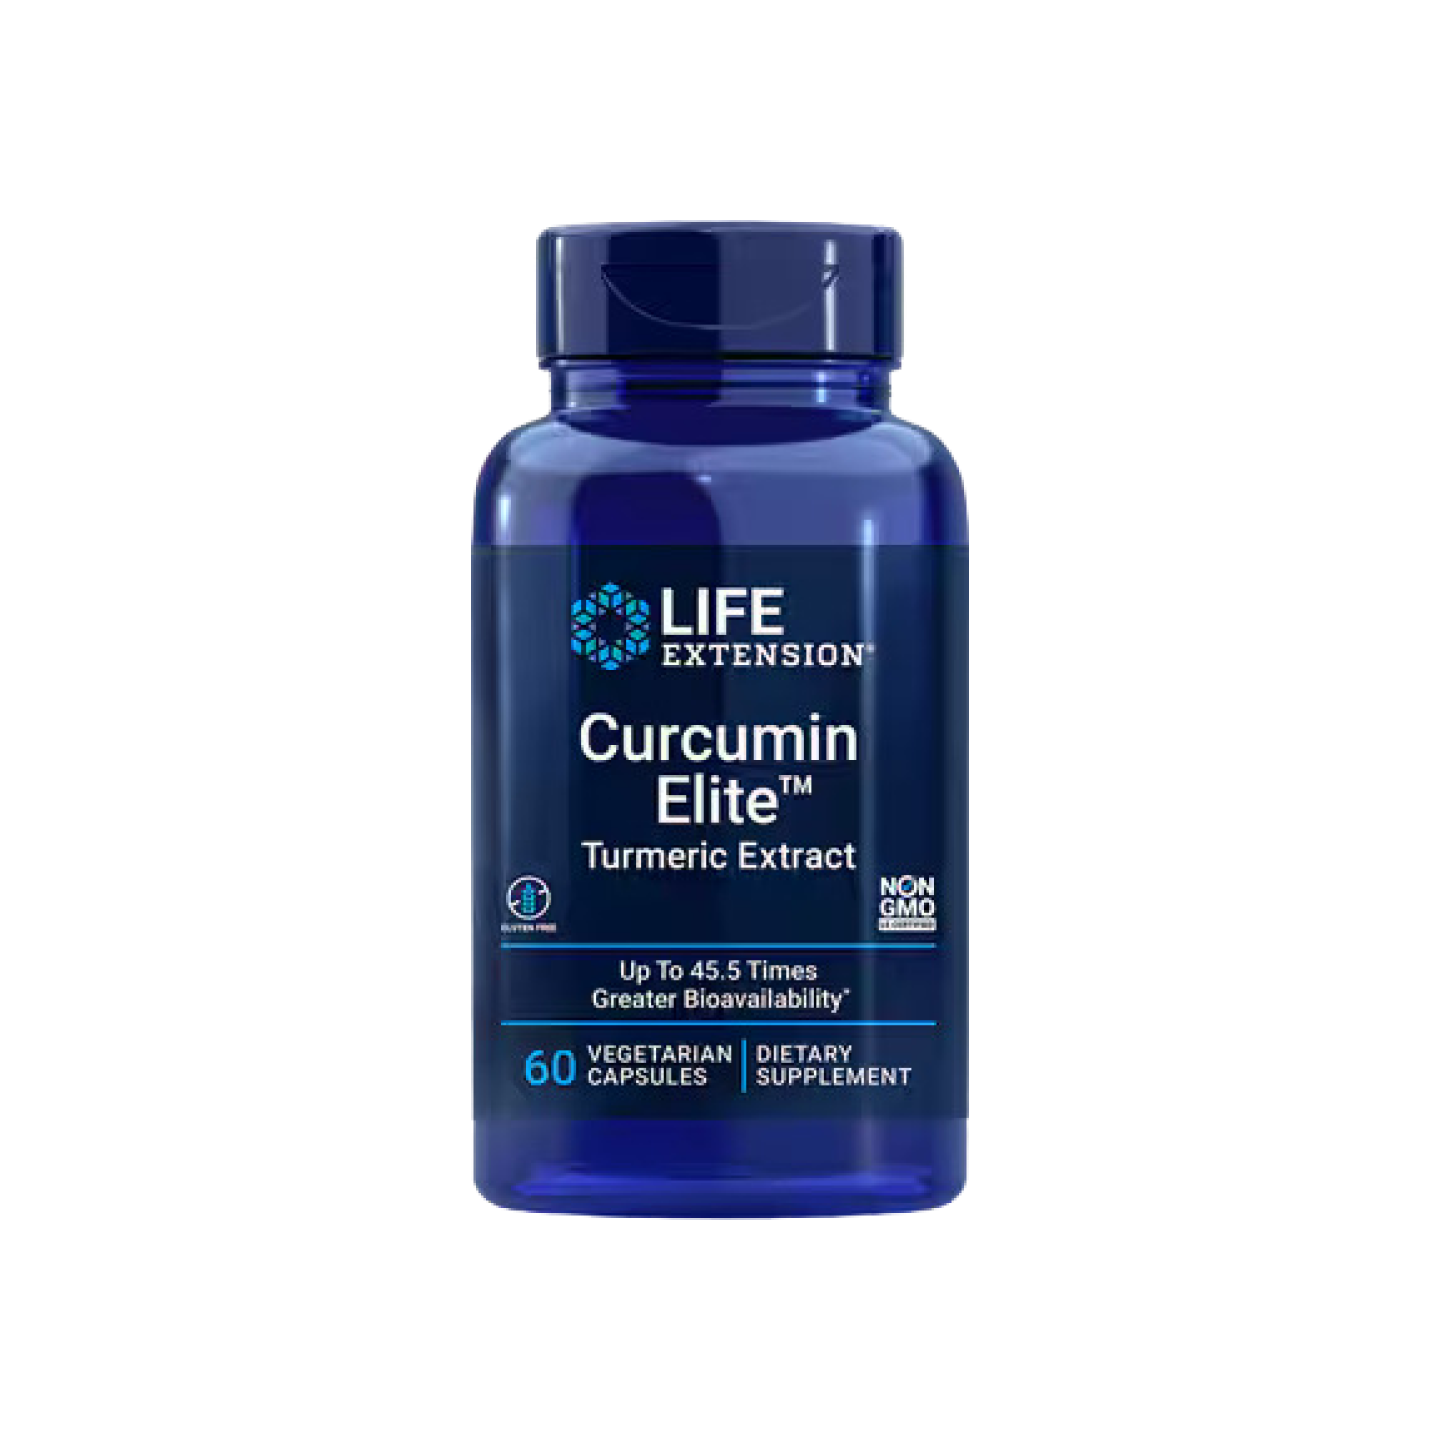 Curcumin Elite